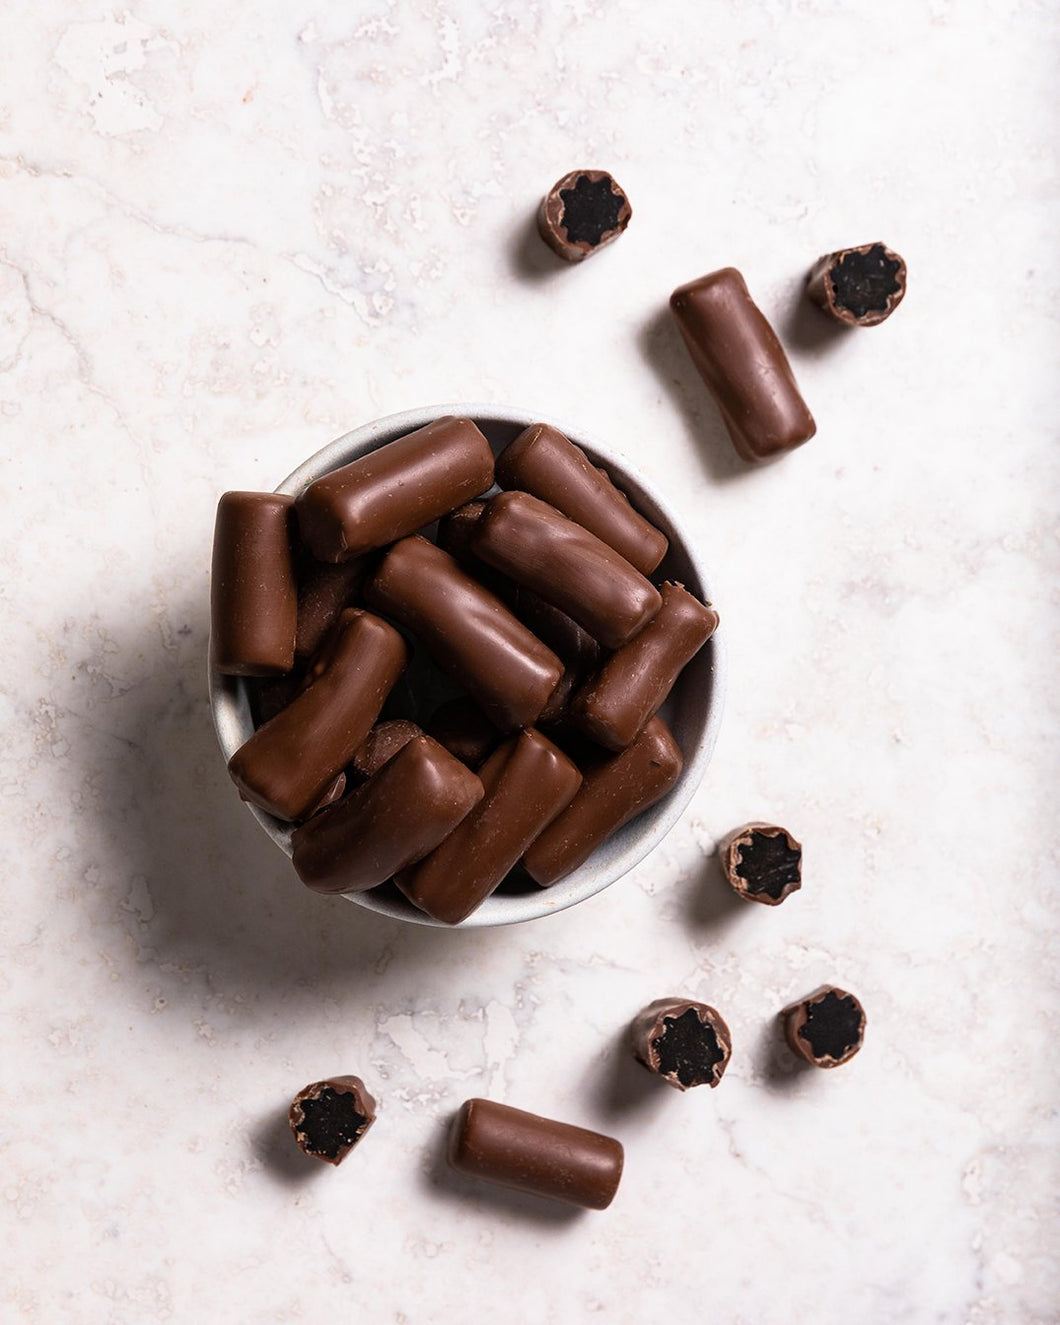 Chocolate covered licorice